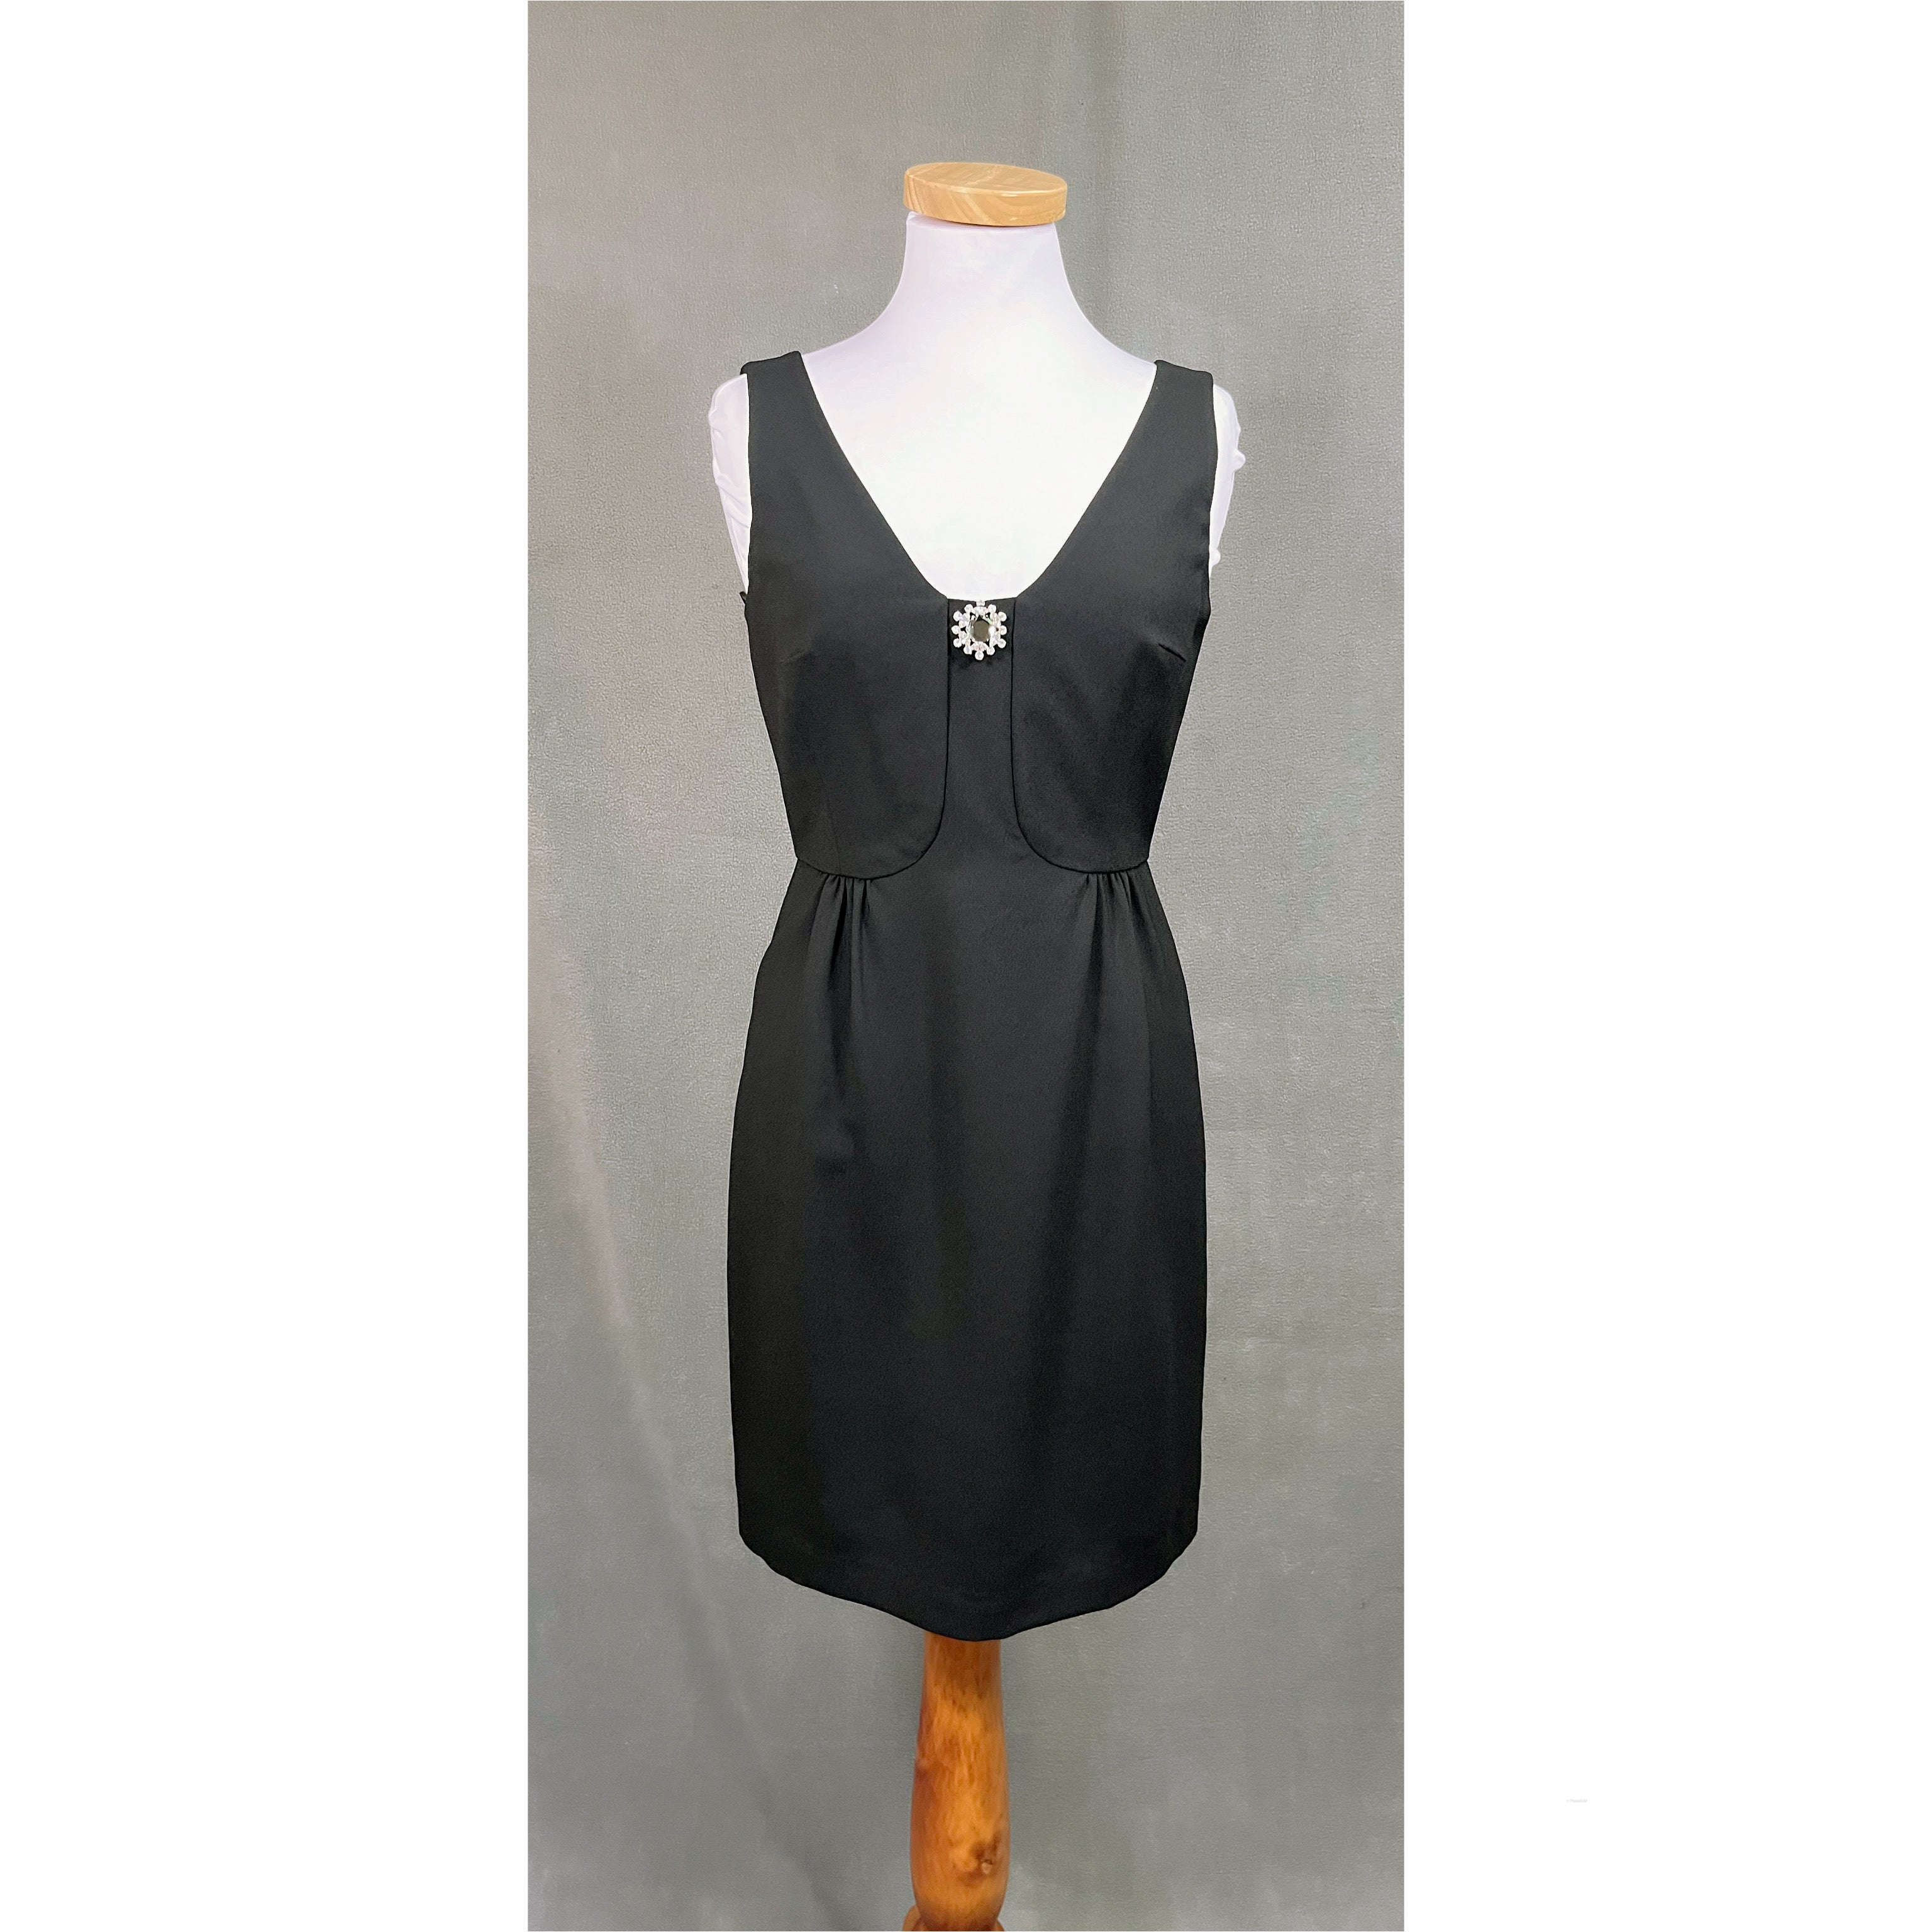 Trina Turk black dress, size 2, NEW WITH TAGS!